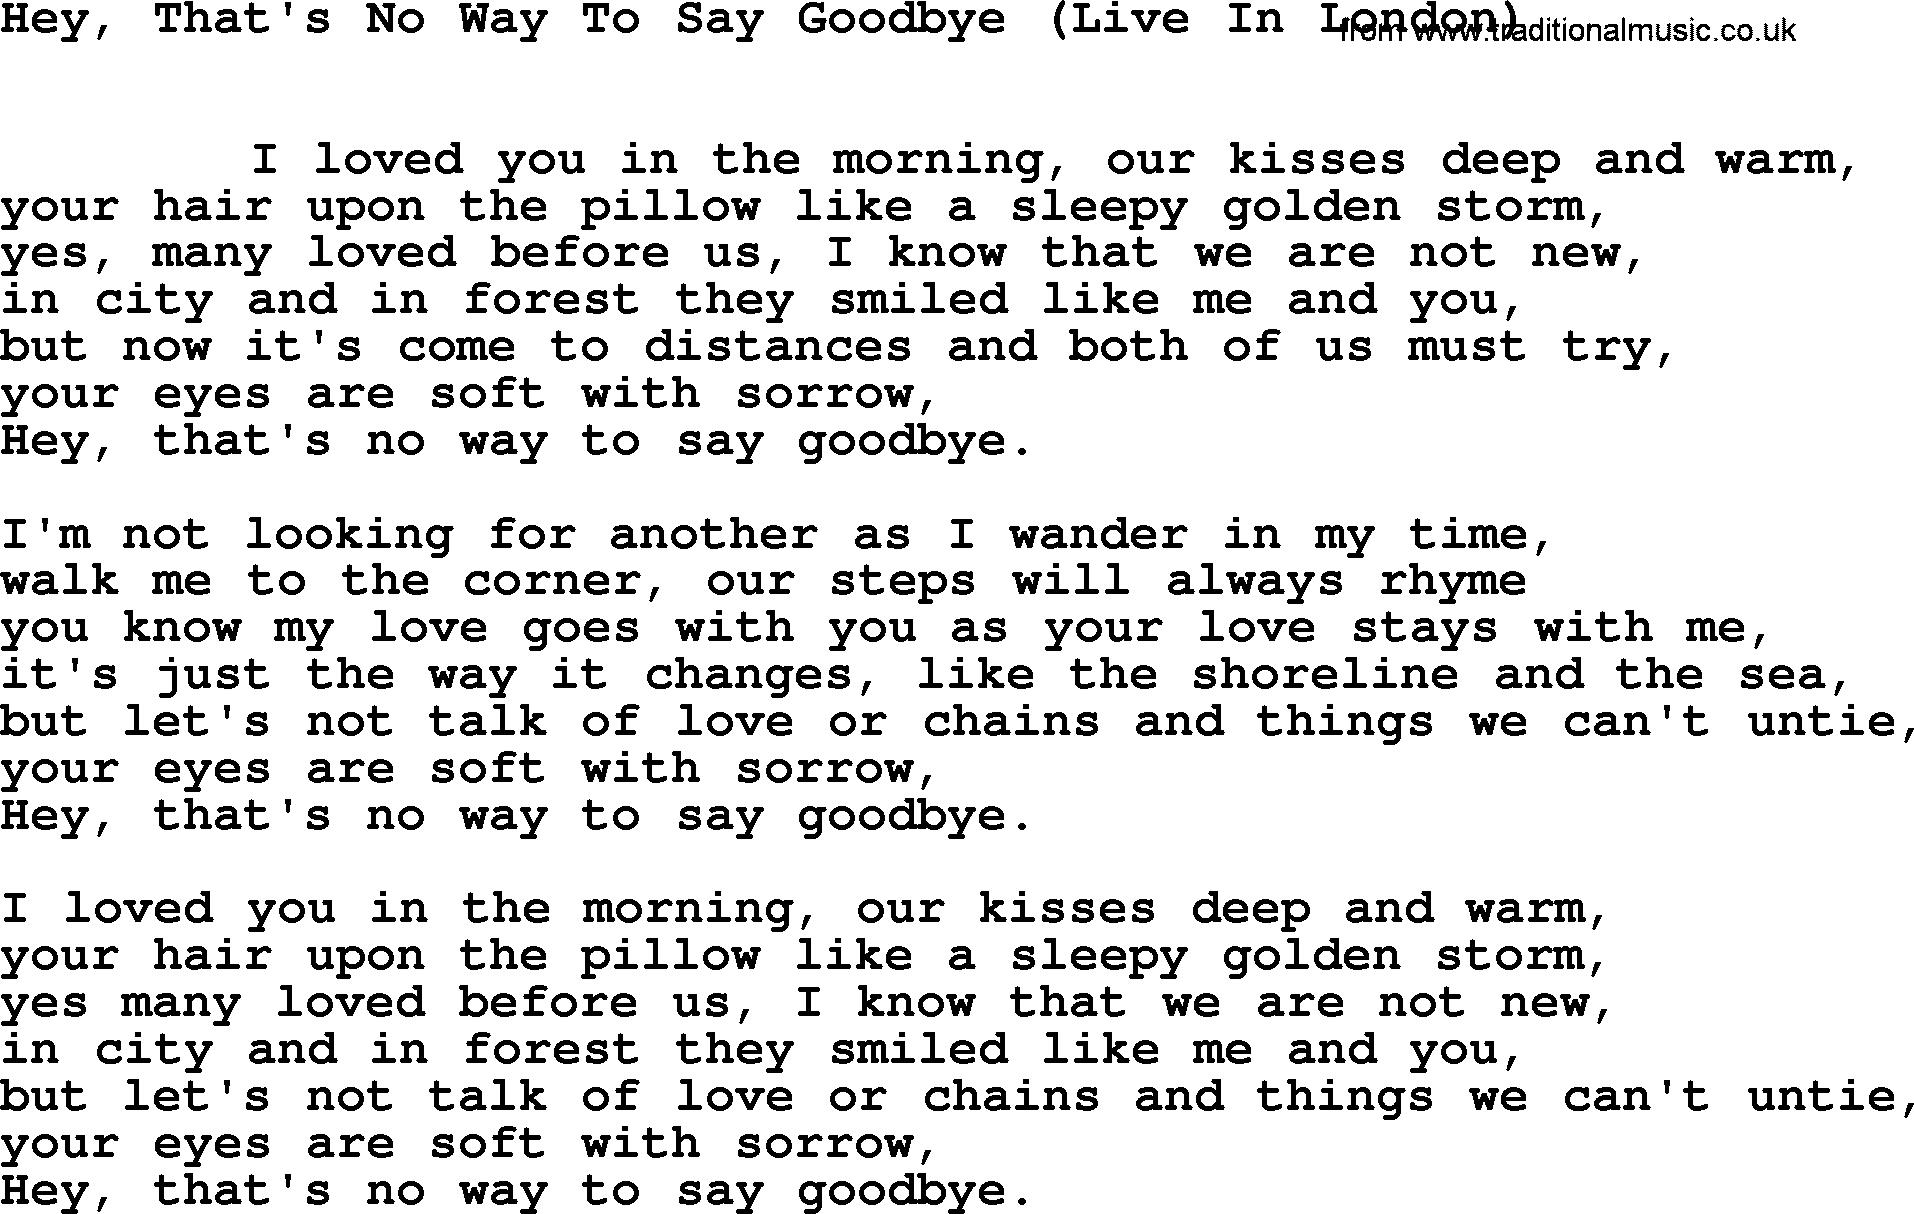 Leonard Cohen song Hey Thats No Way Say Goodbye(Live)-leonard-cohen.txt lyrics